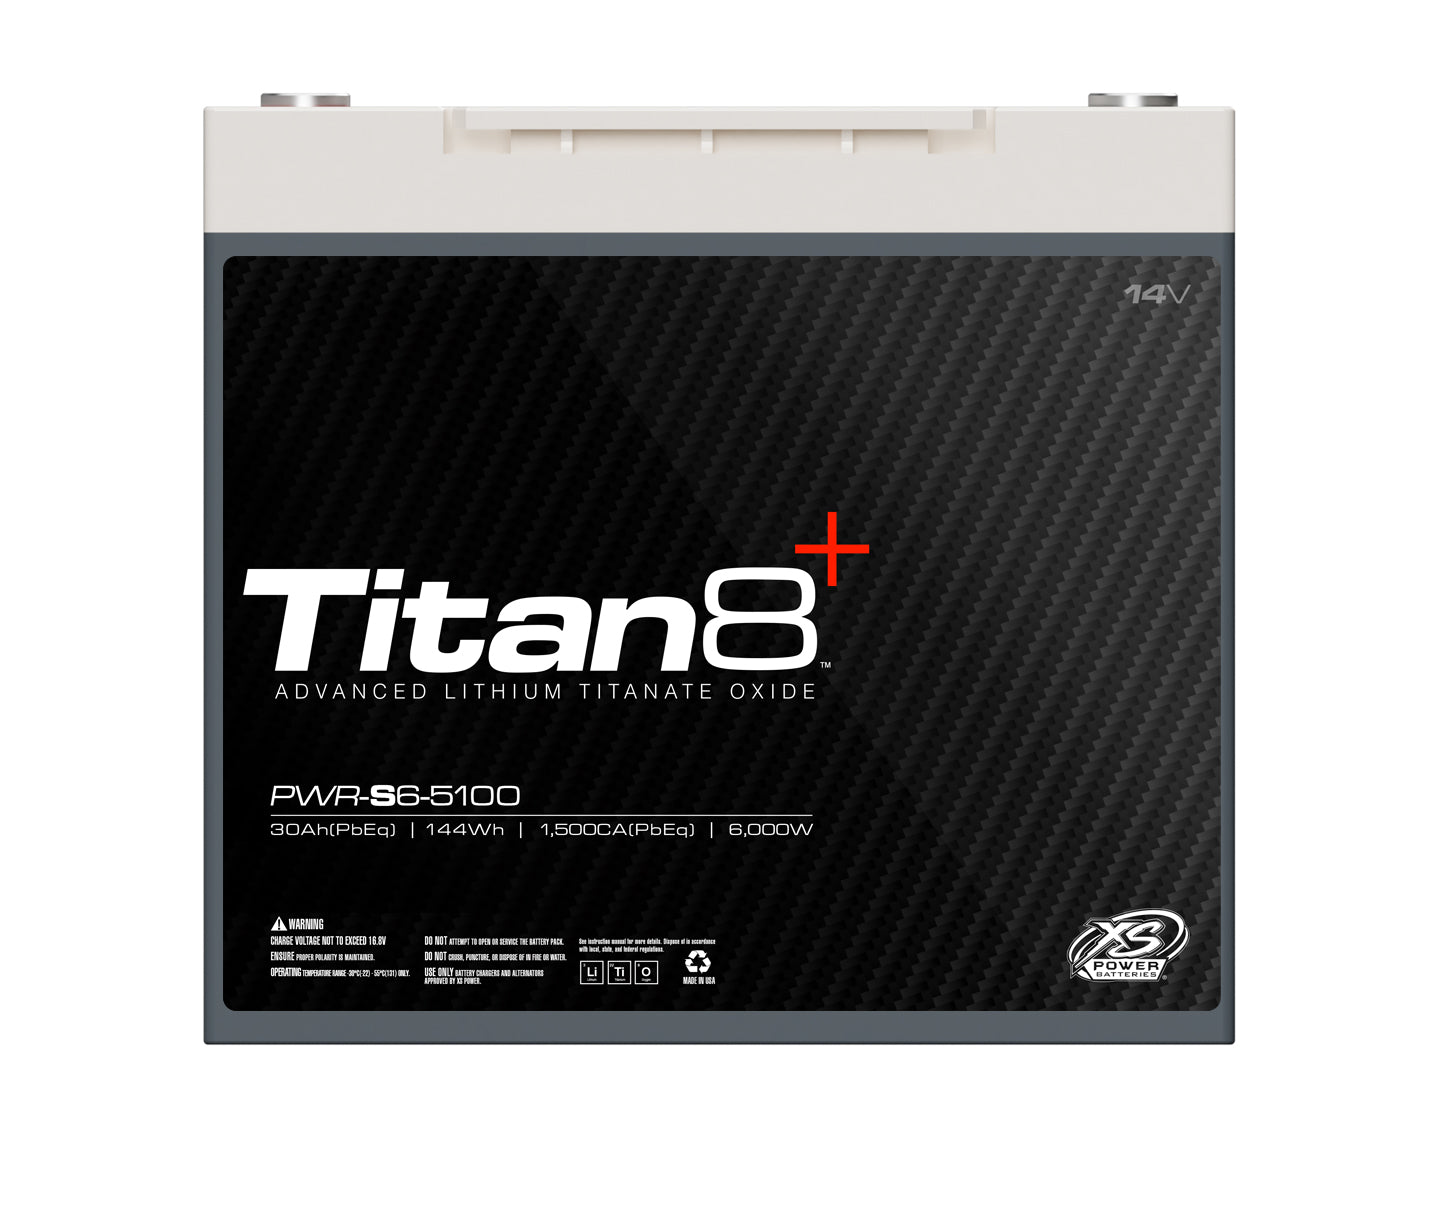 PWR-S6-5100 XS Power Titan8 14VDC Group 51 Lithium LTO Car Audio Vehicle Battery 5000W 144Wh